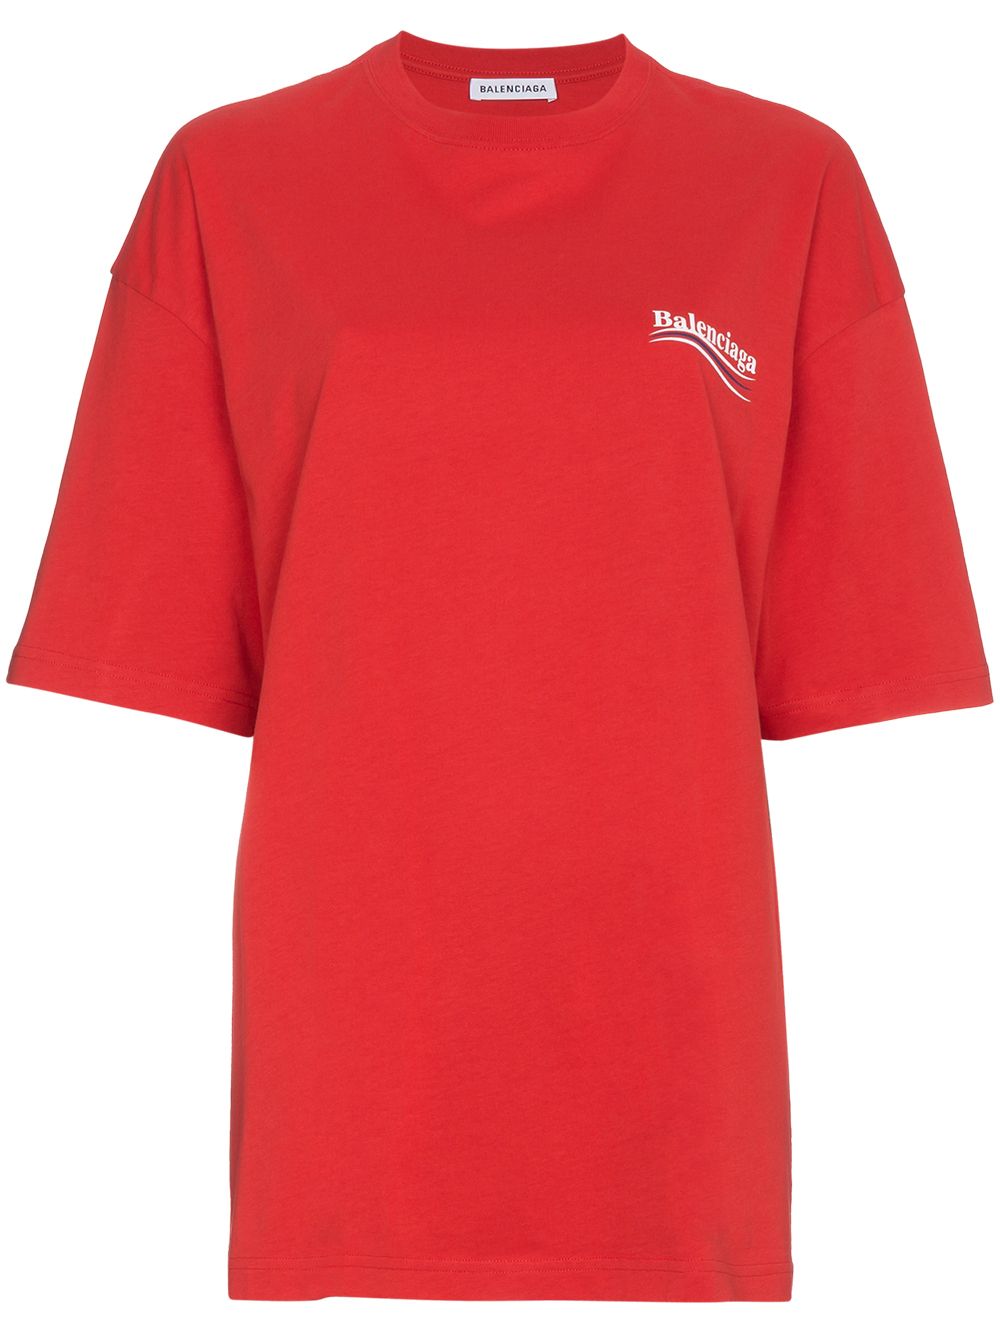 Shop red Balenciaga logo print T-shirt 